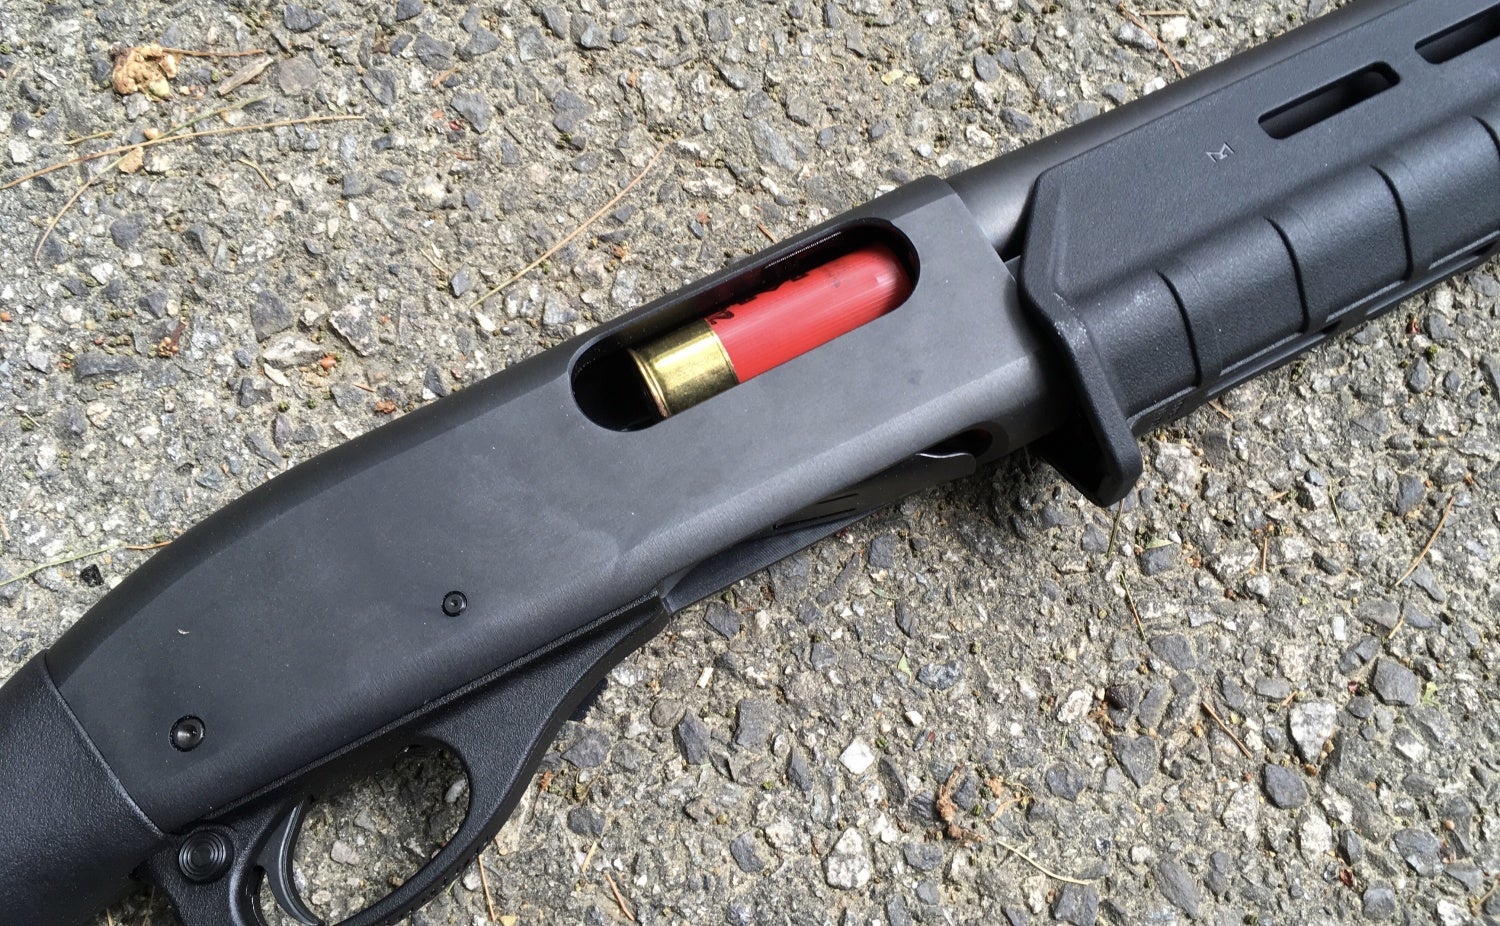 TFB REVIEW: Remington 870 Tac14 12 Gauge Firearm - With A Twist -The Firear...